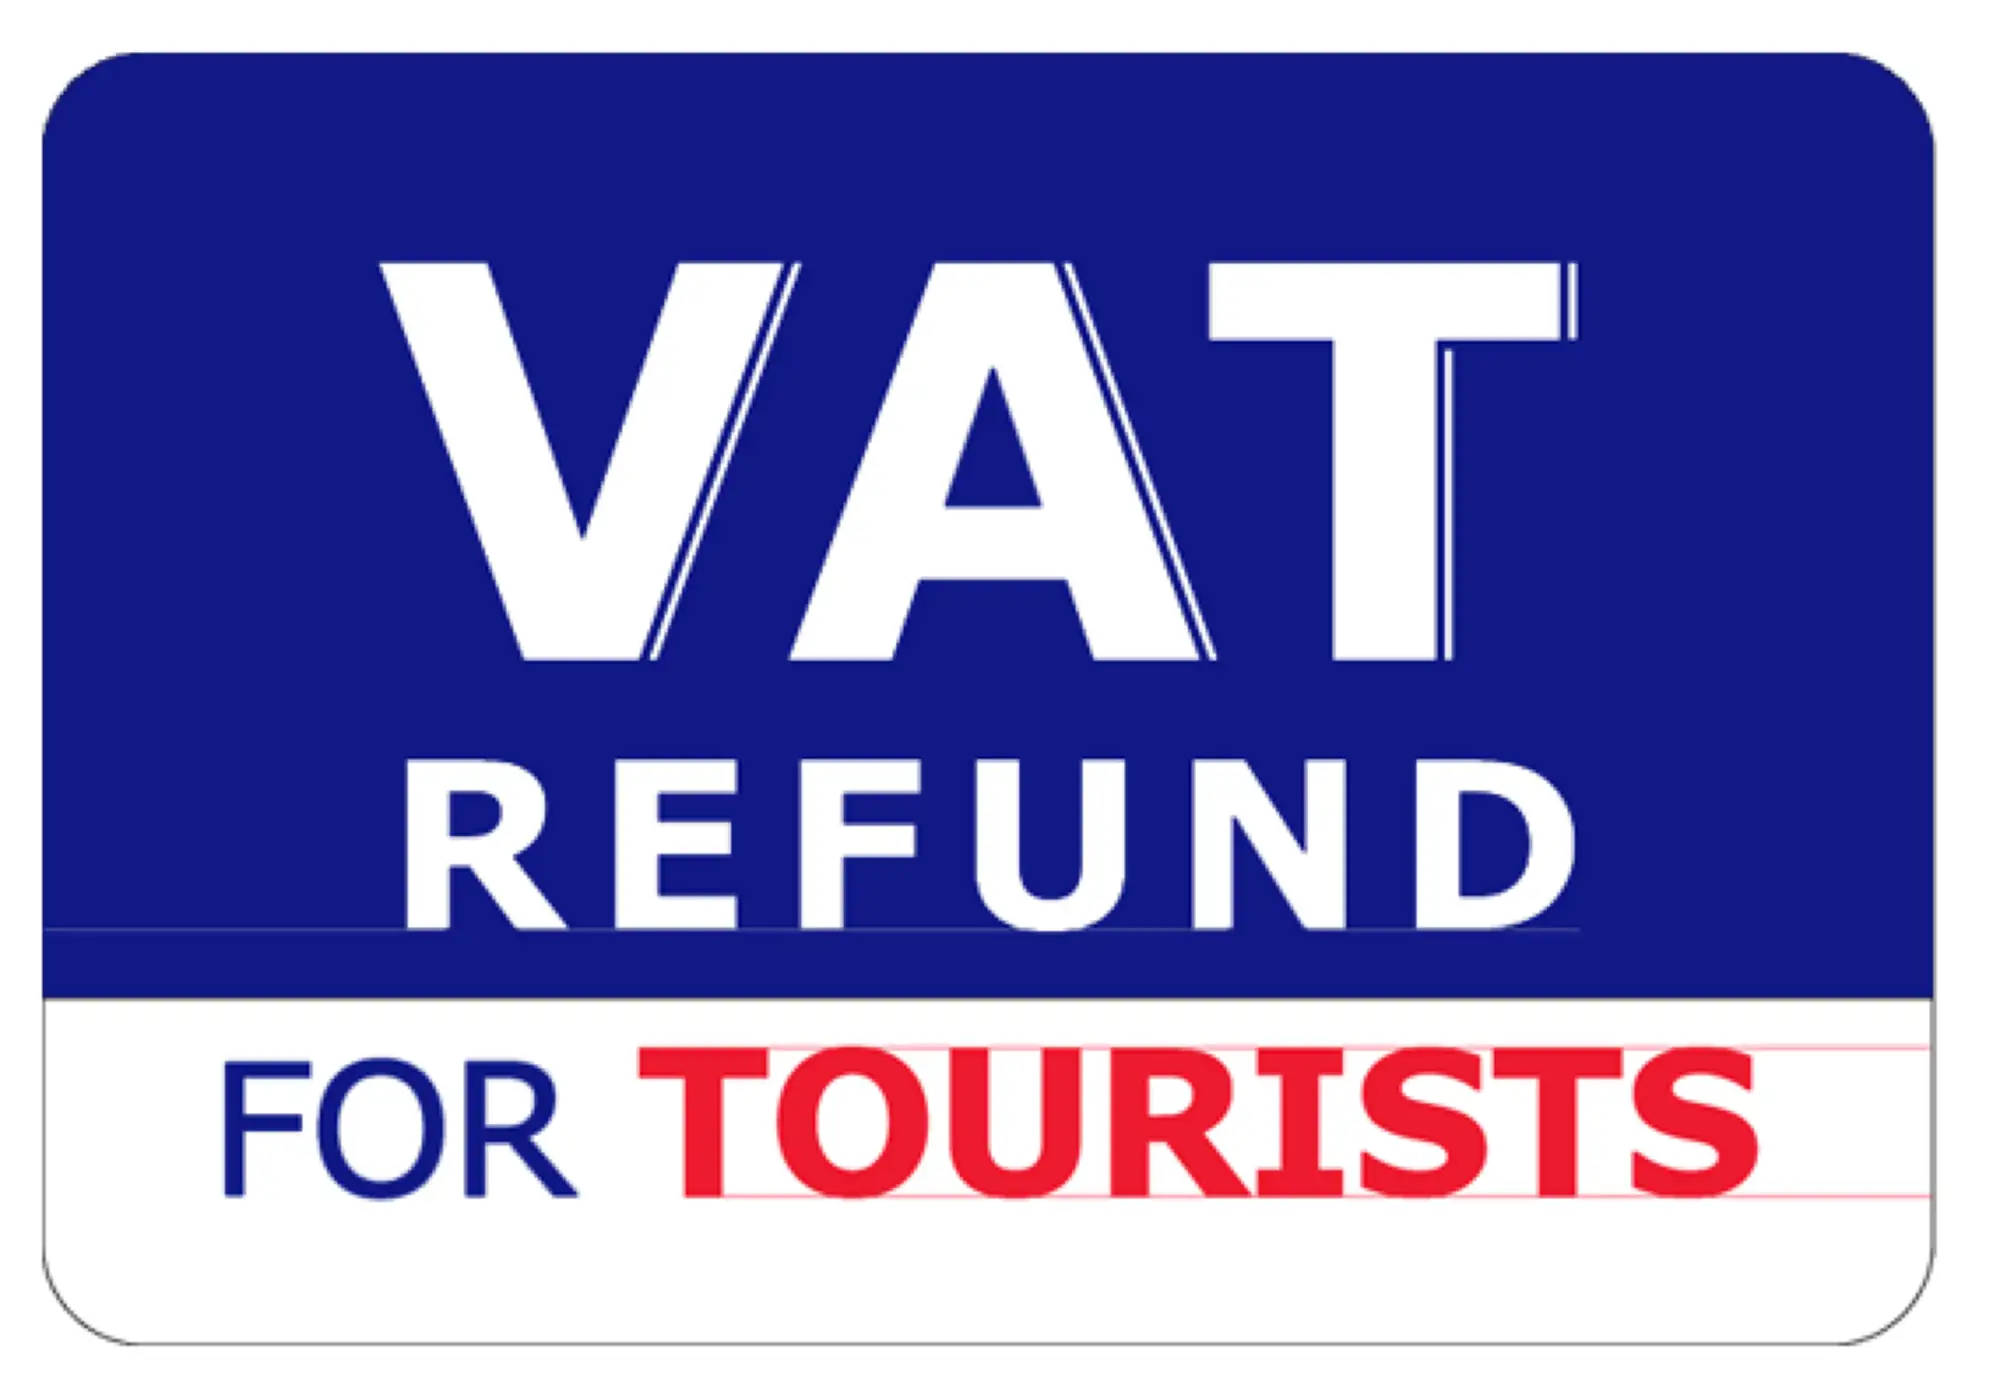 VAT REFUND FOR TOURISTS标志